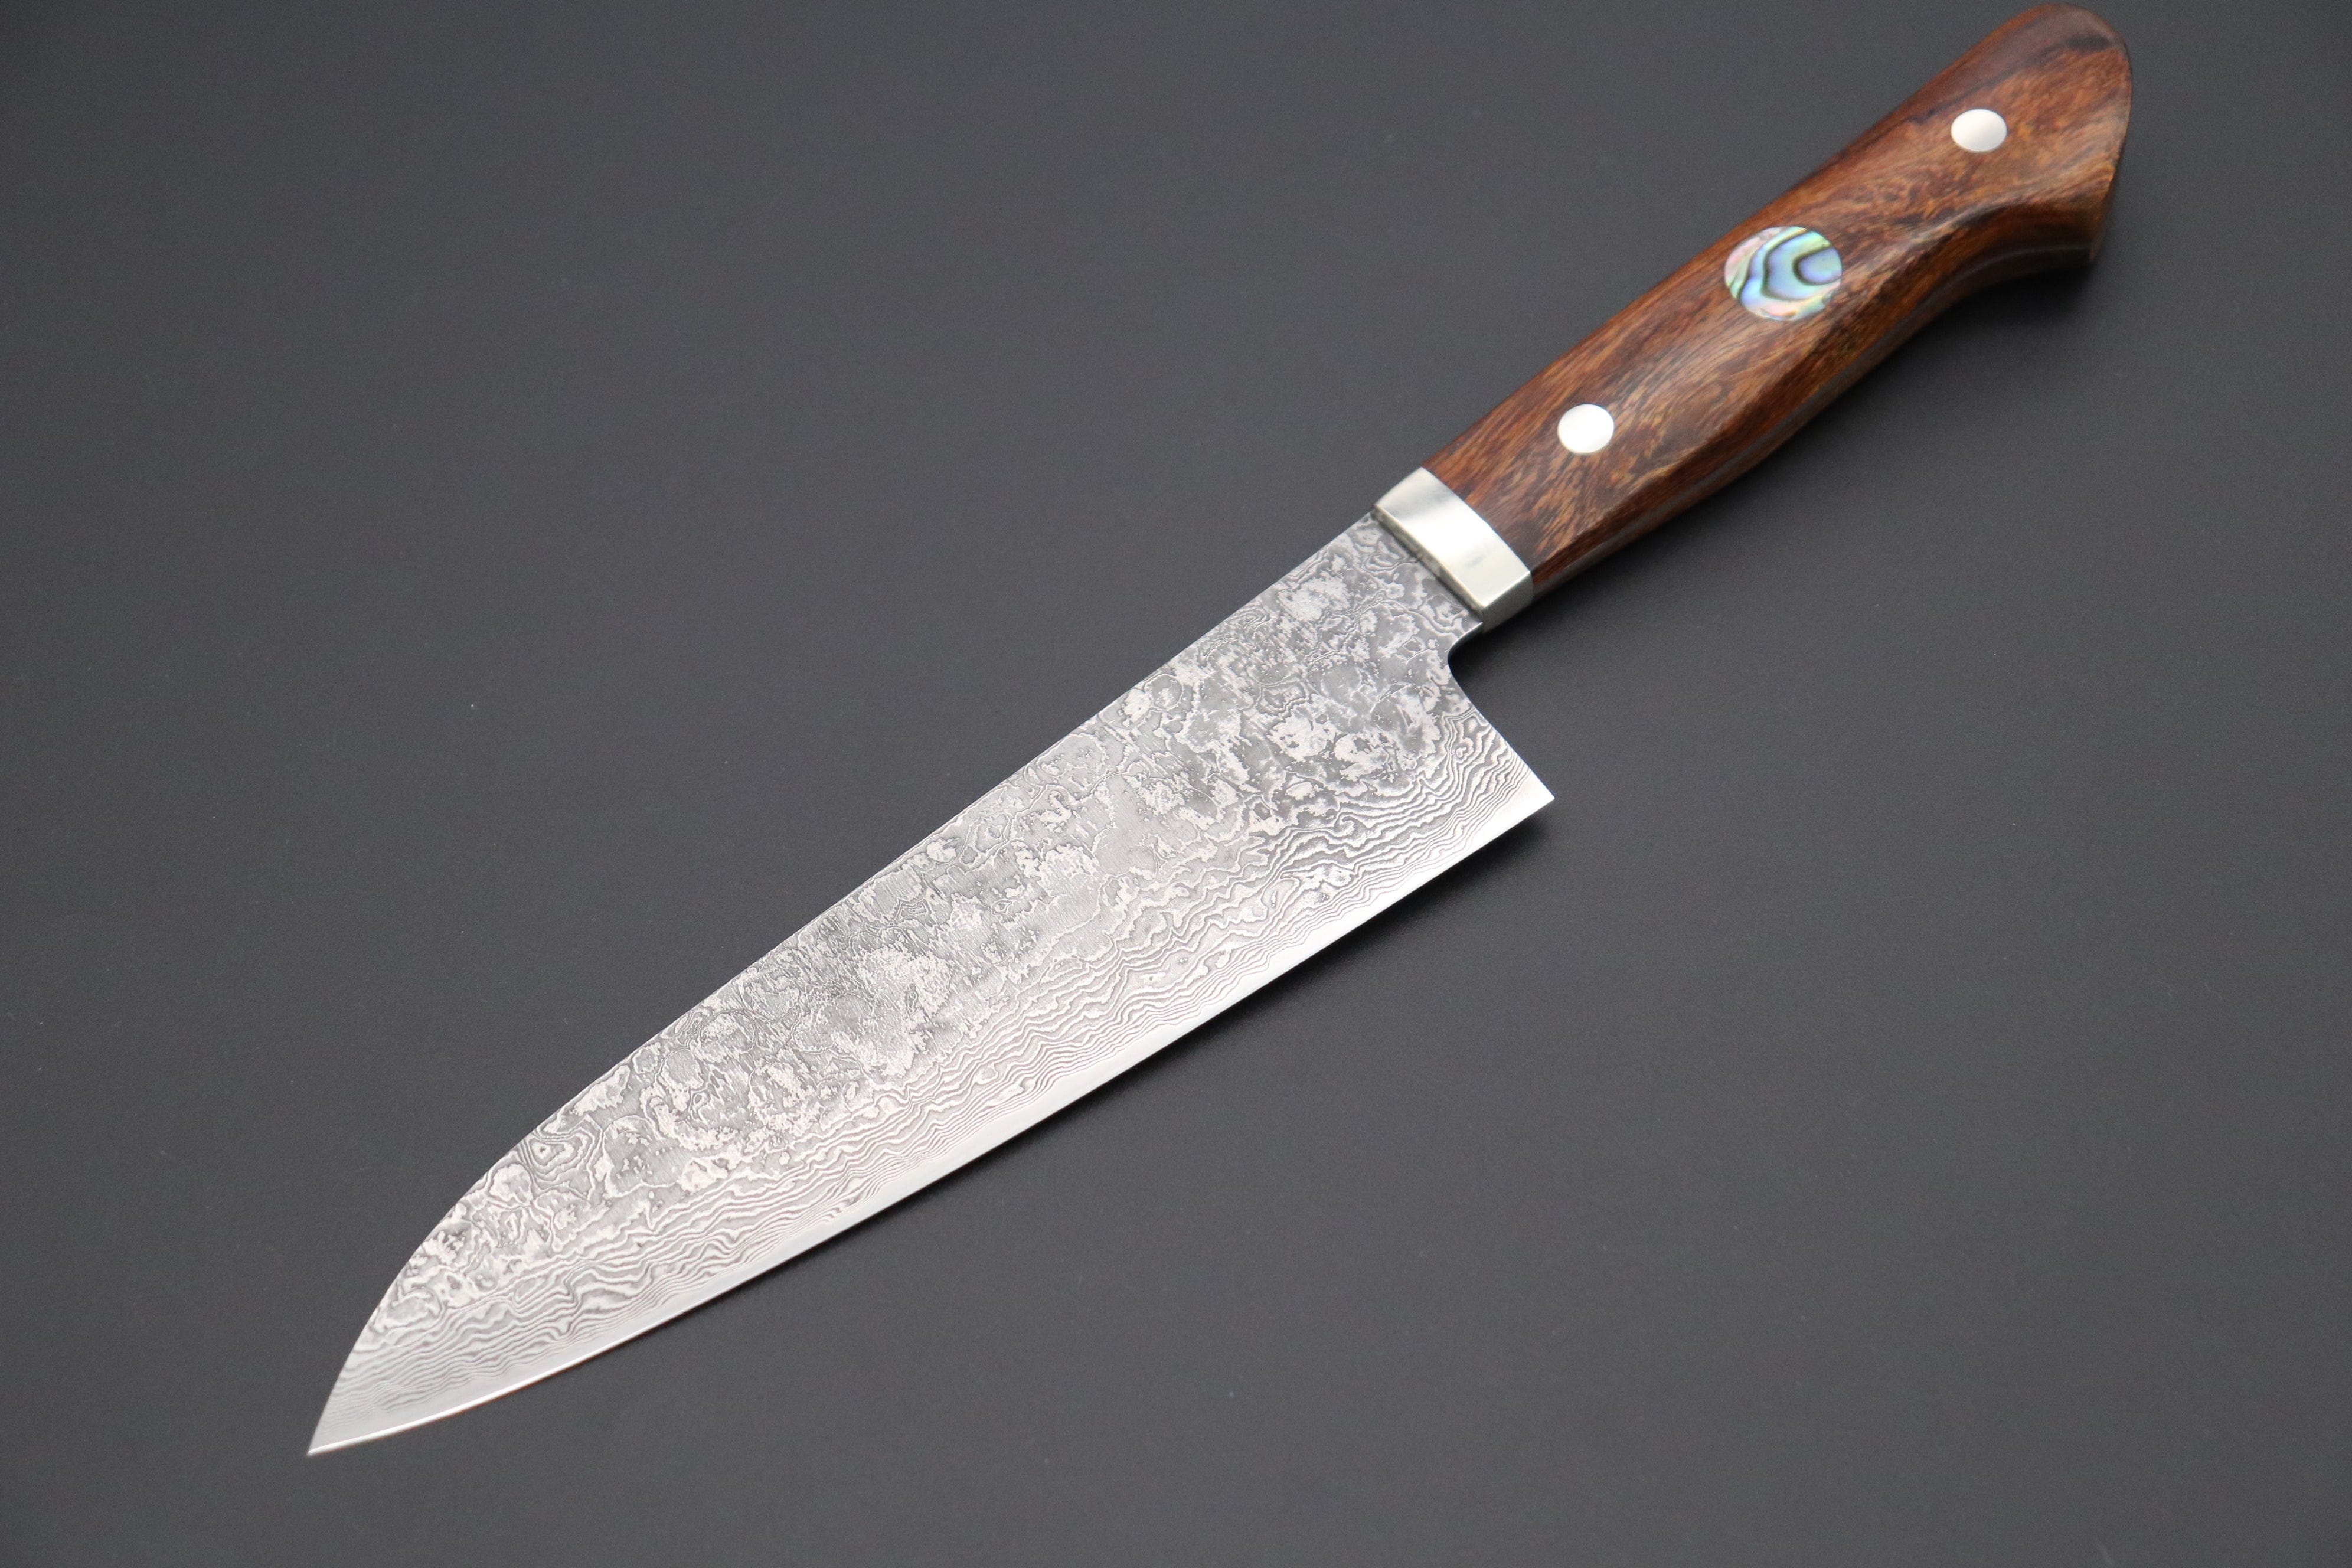 Shun Luna 8 Chef's Knife With Sheath